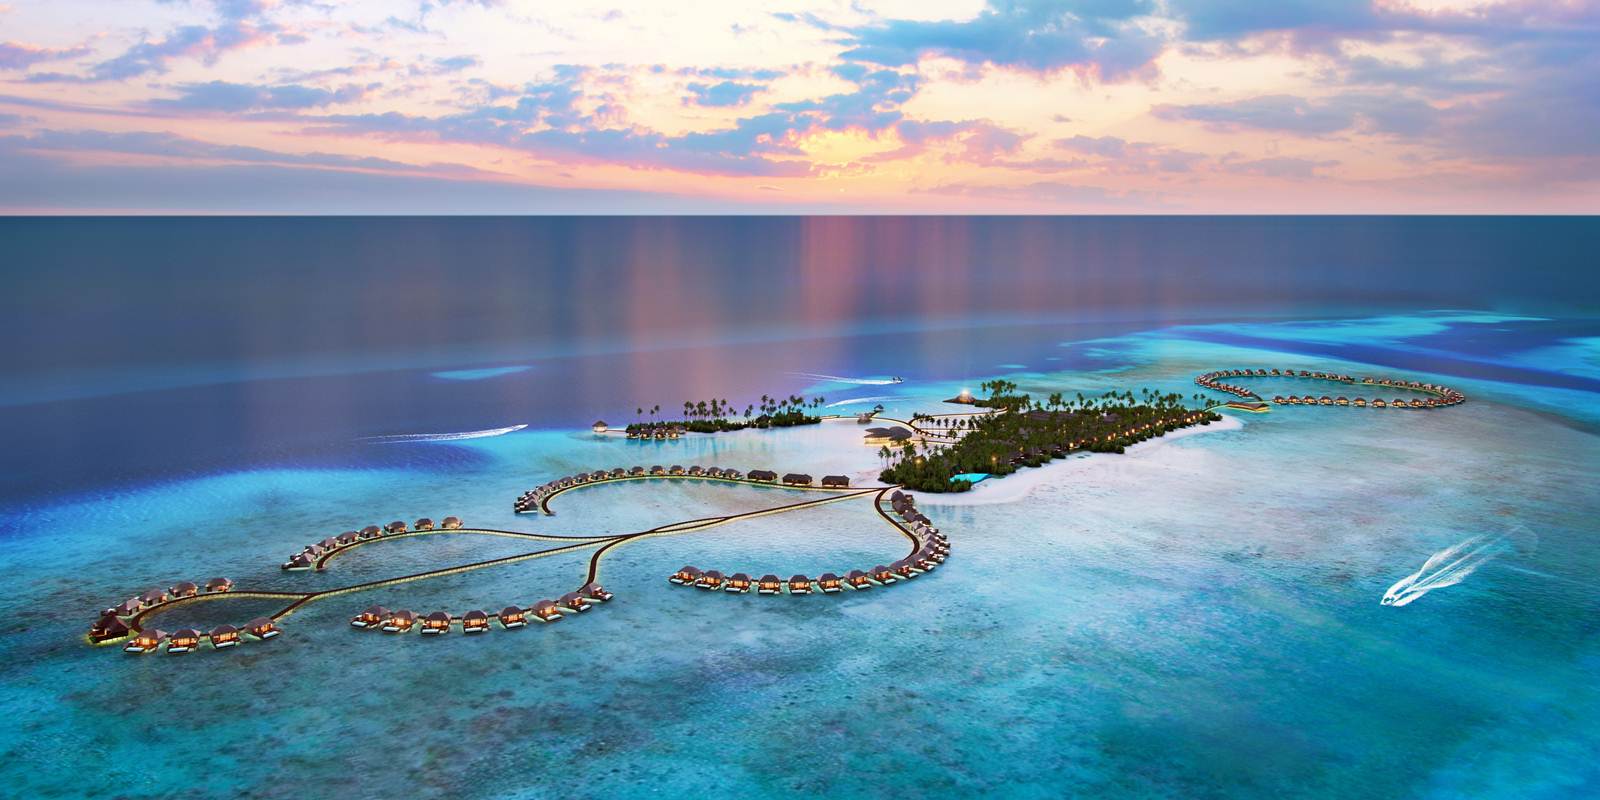 O hotel resort Radisson Blu Maldivas visto de cima no atol Alifu Dhaalu